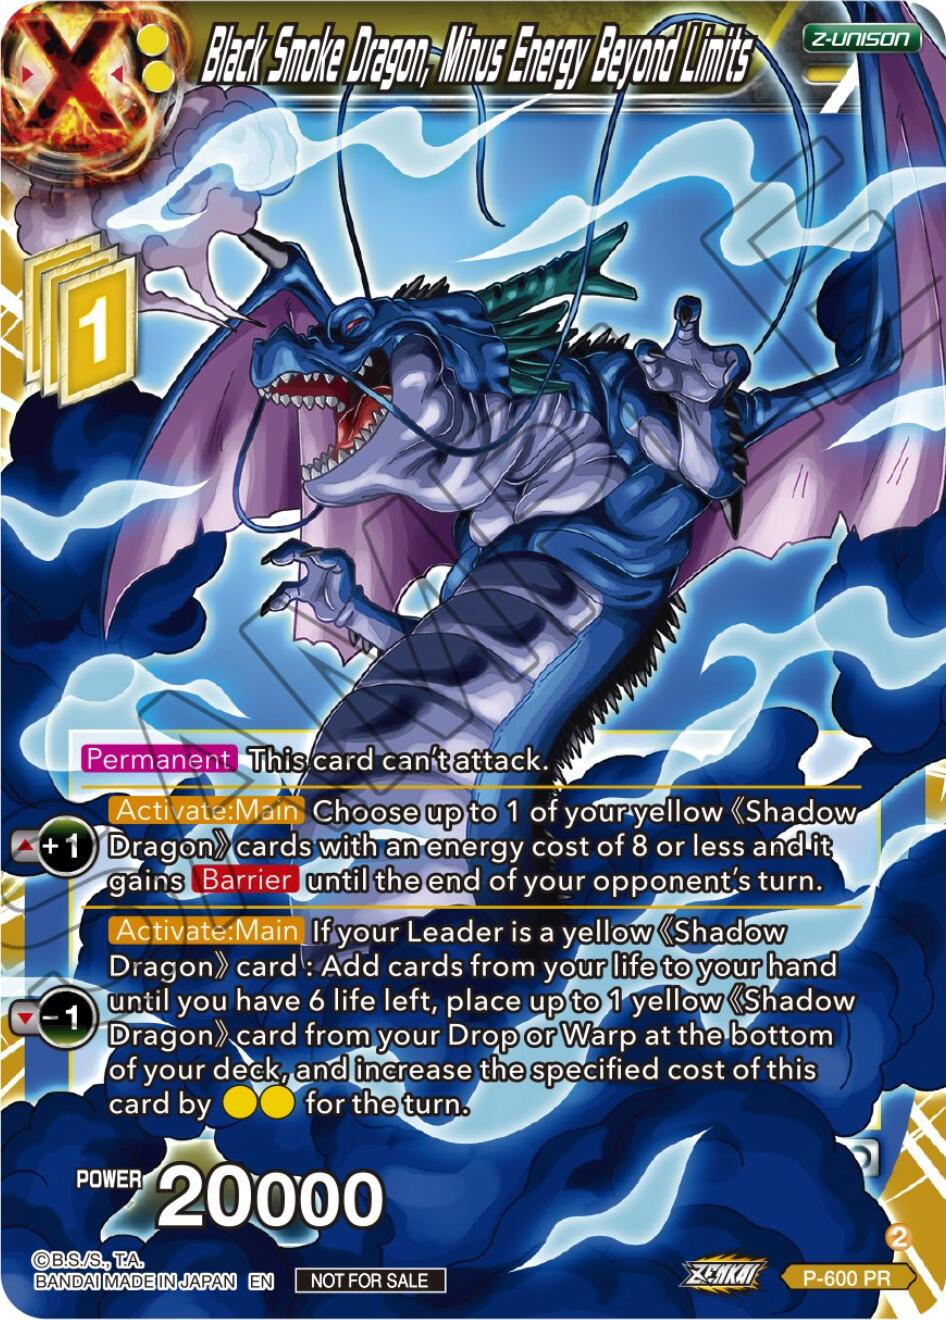 Black Smoke Dragon, Minus Energy Beyond Limits (P-600) [Promotion Cards] | Sanctuary Gaming